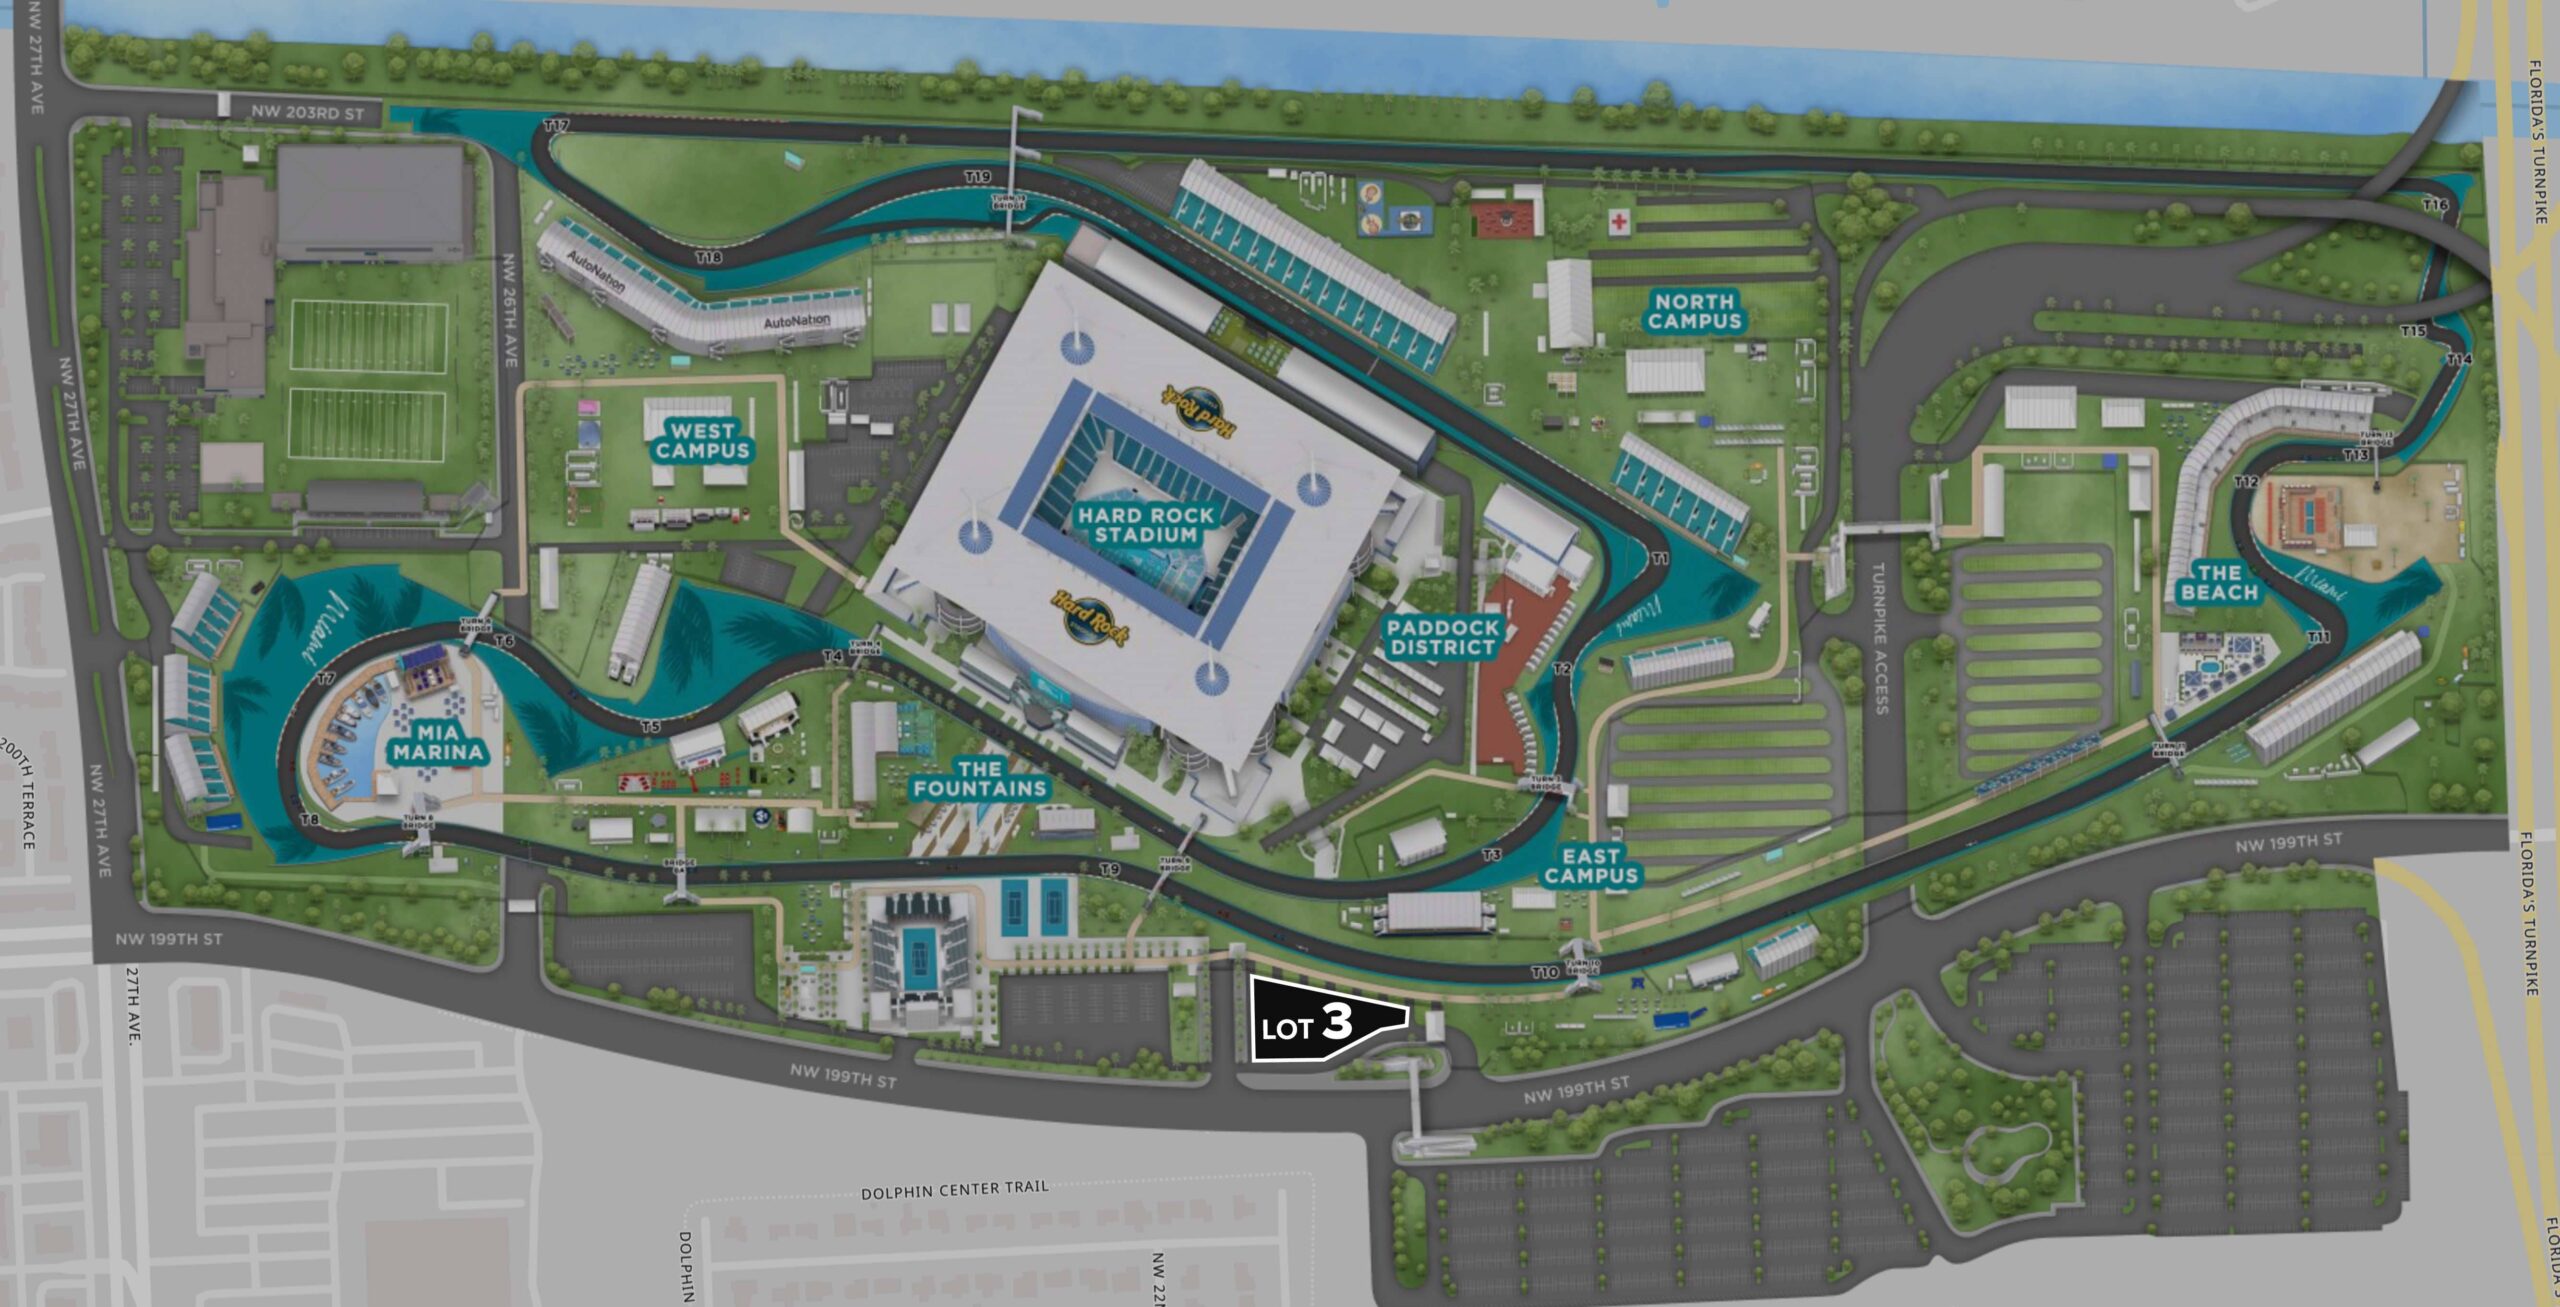 Parking Lot Location Map for Black Lot 3 at the Formula 1 Crypto.com Miami Grand Prix